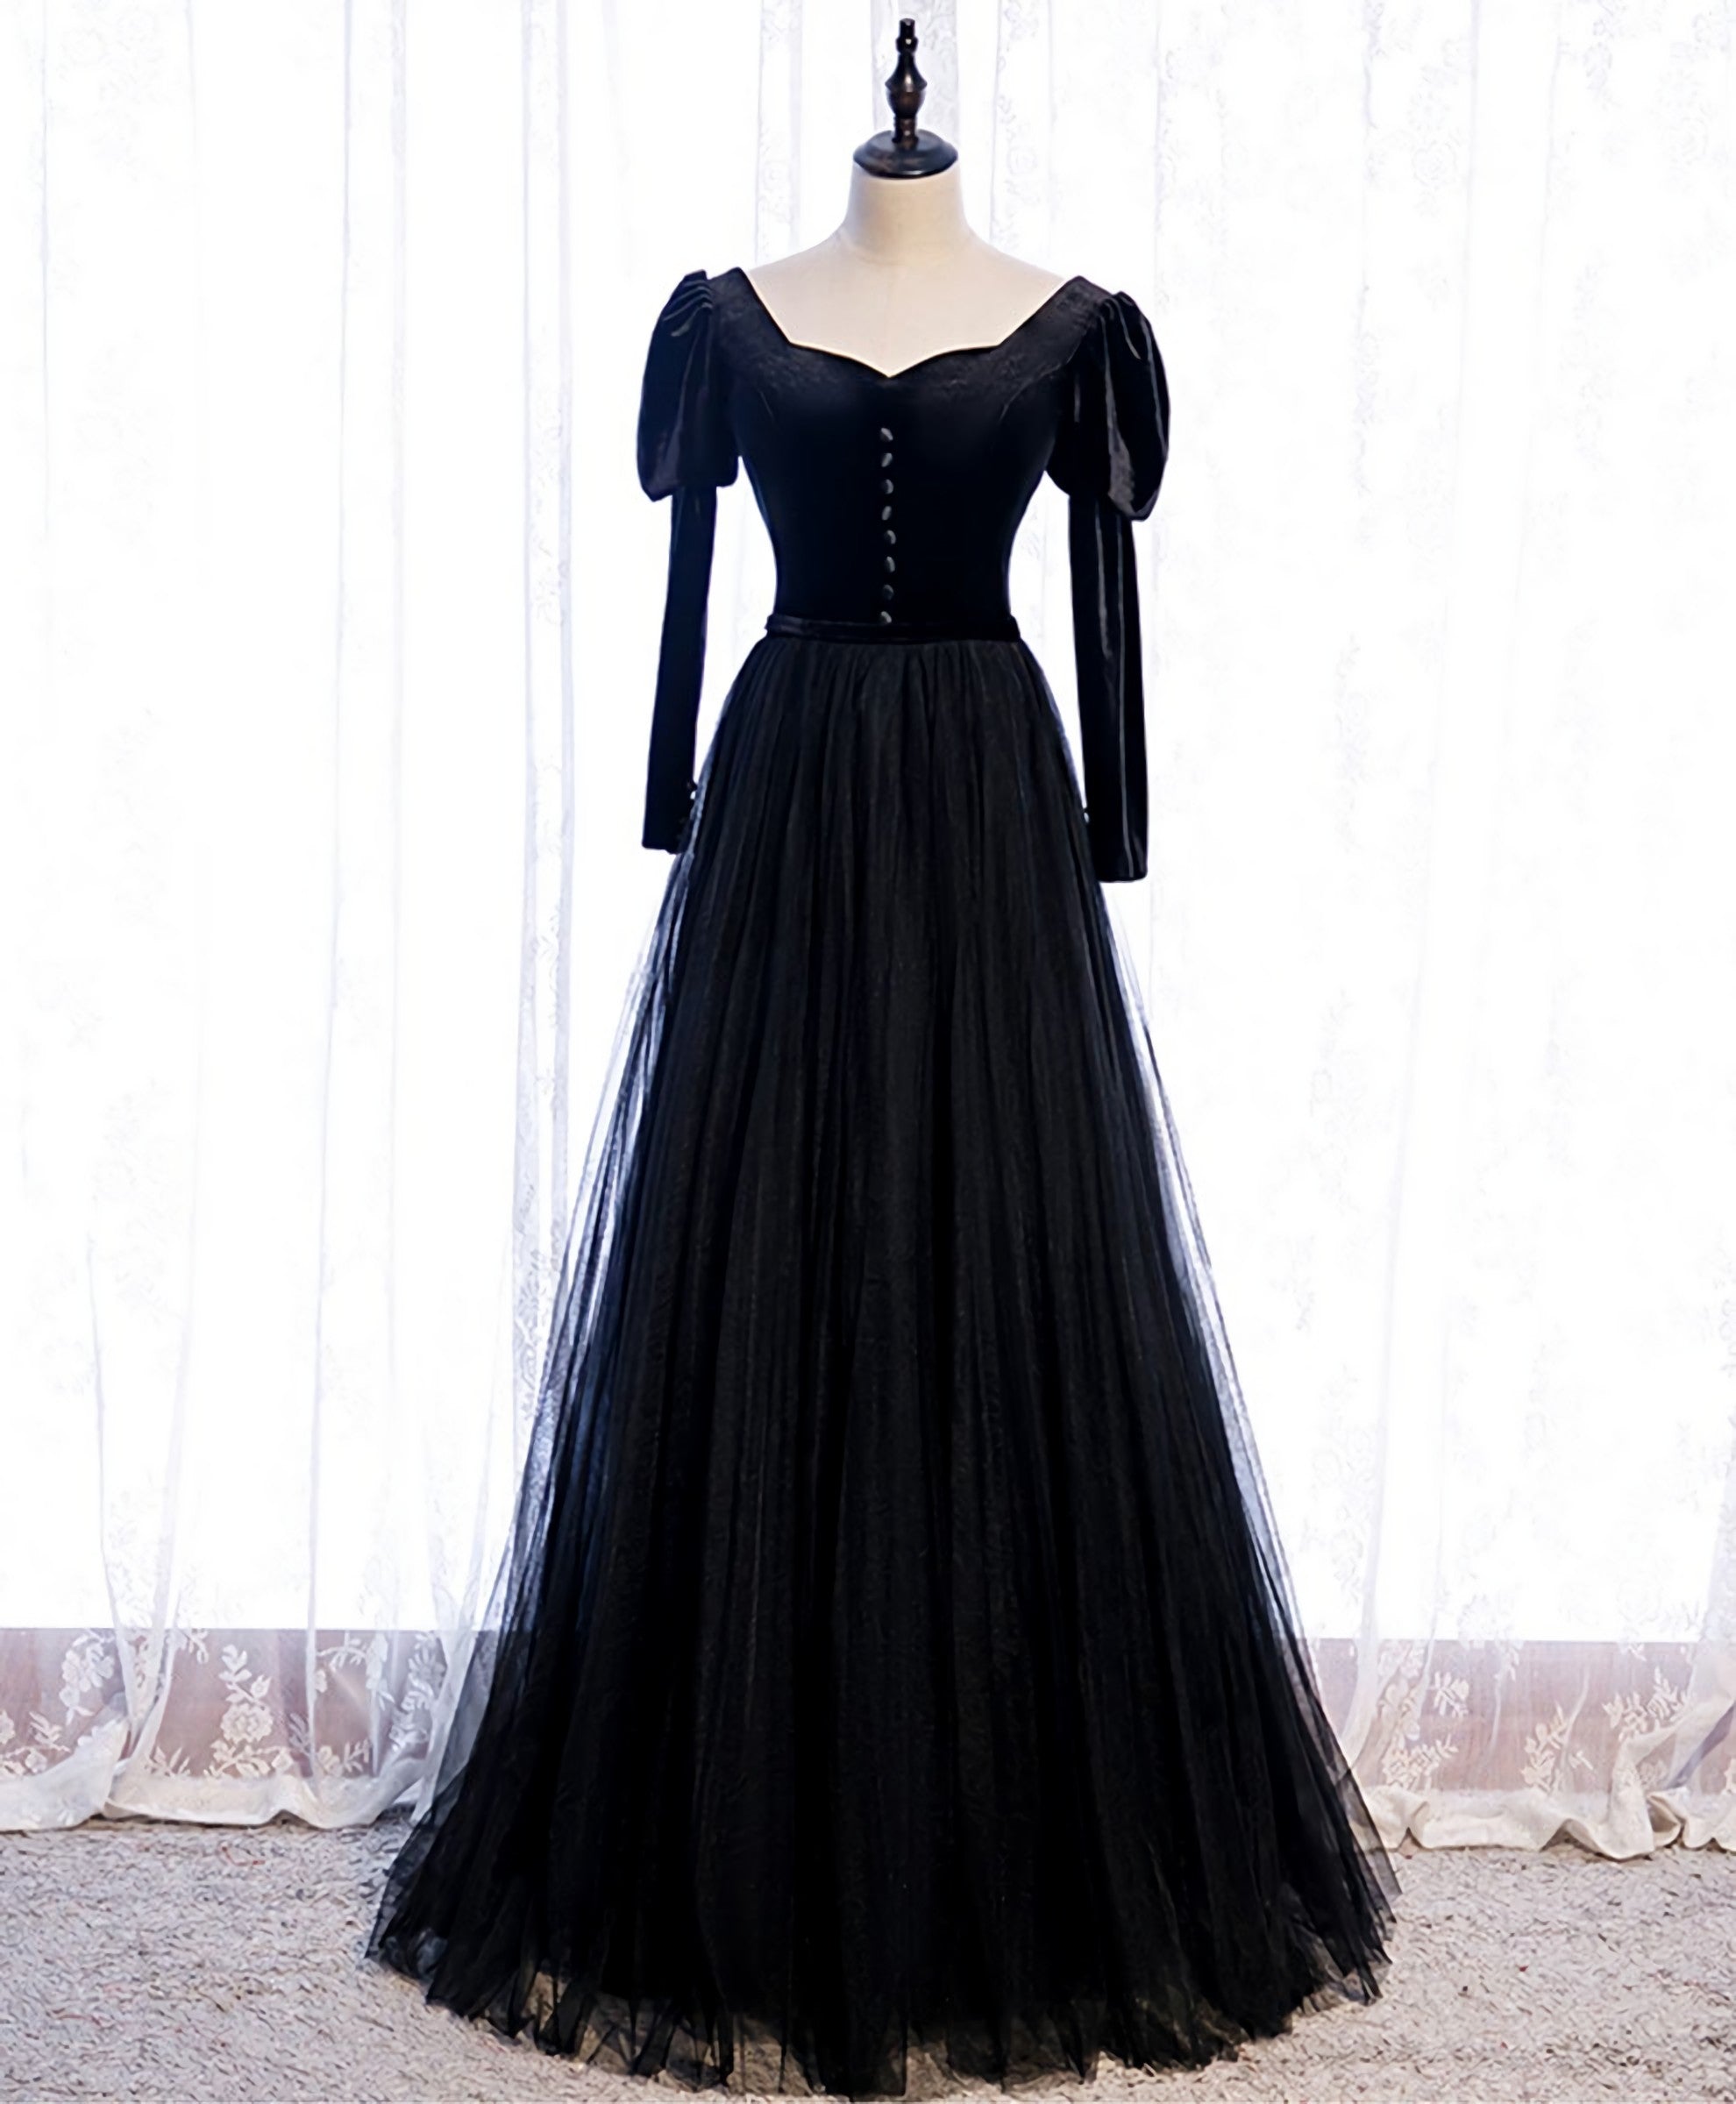 Homecoming Dress Floral, Black Tulle Long Prom Dress, Black Tulle Formal Dress